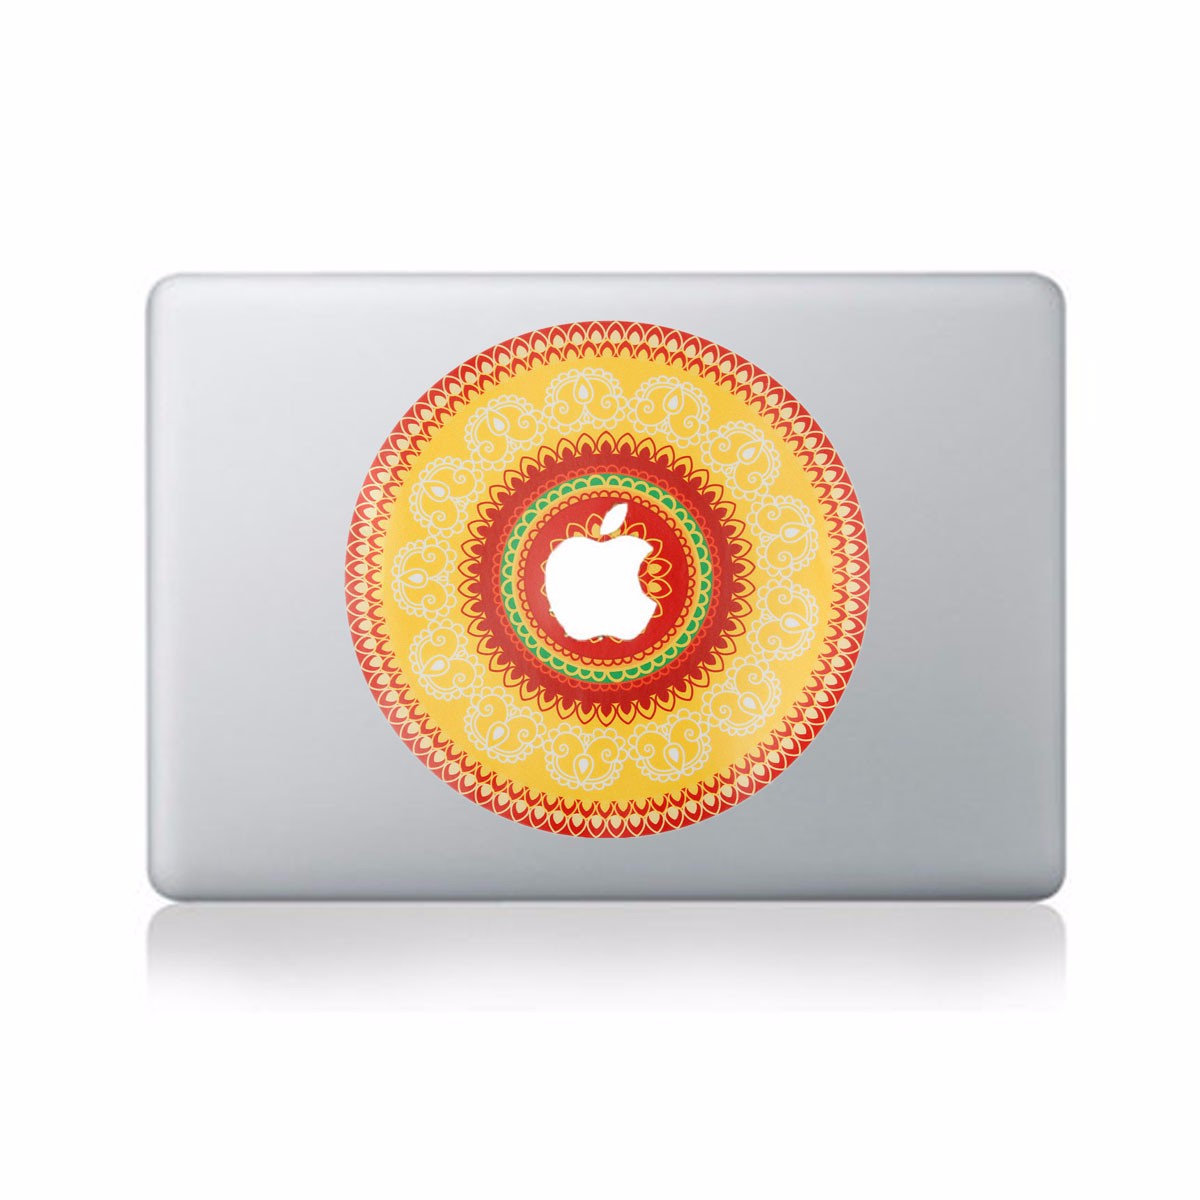 Lovely-Flower-Decal-Vinyl-Sticker-Skin-Laptop-Sticker-Decal-For-Apple-MacBook-11-12-13-15-17-1033207-1